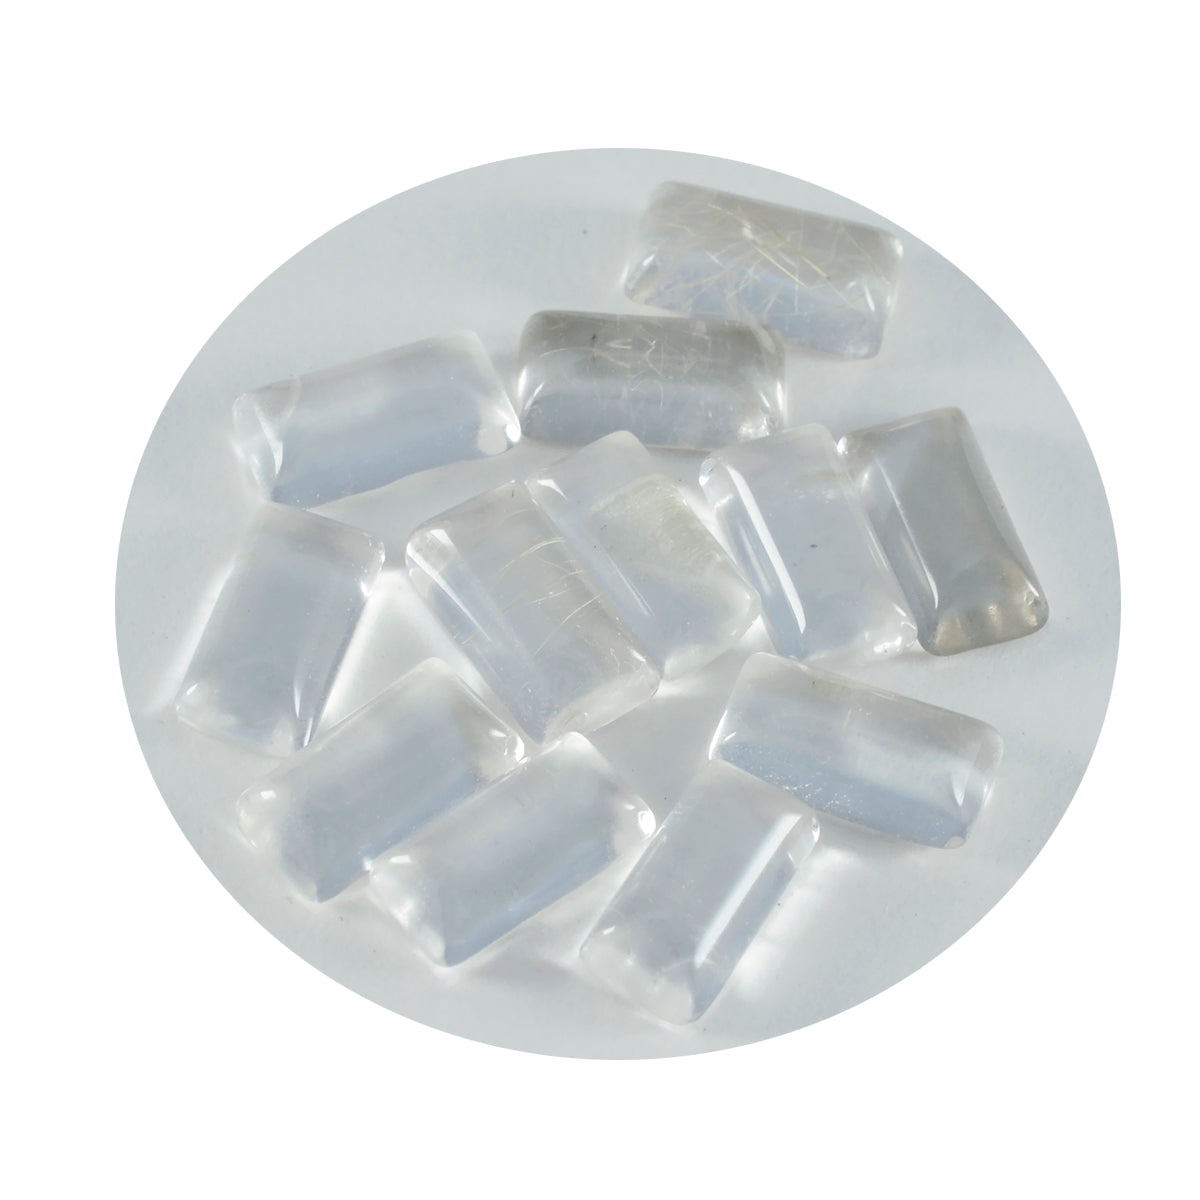 riyogems 1 шт., кабошон из белого кристалла кварца, 8x16 мм, форма багета, хорошее качество, драгоценные камни